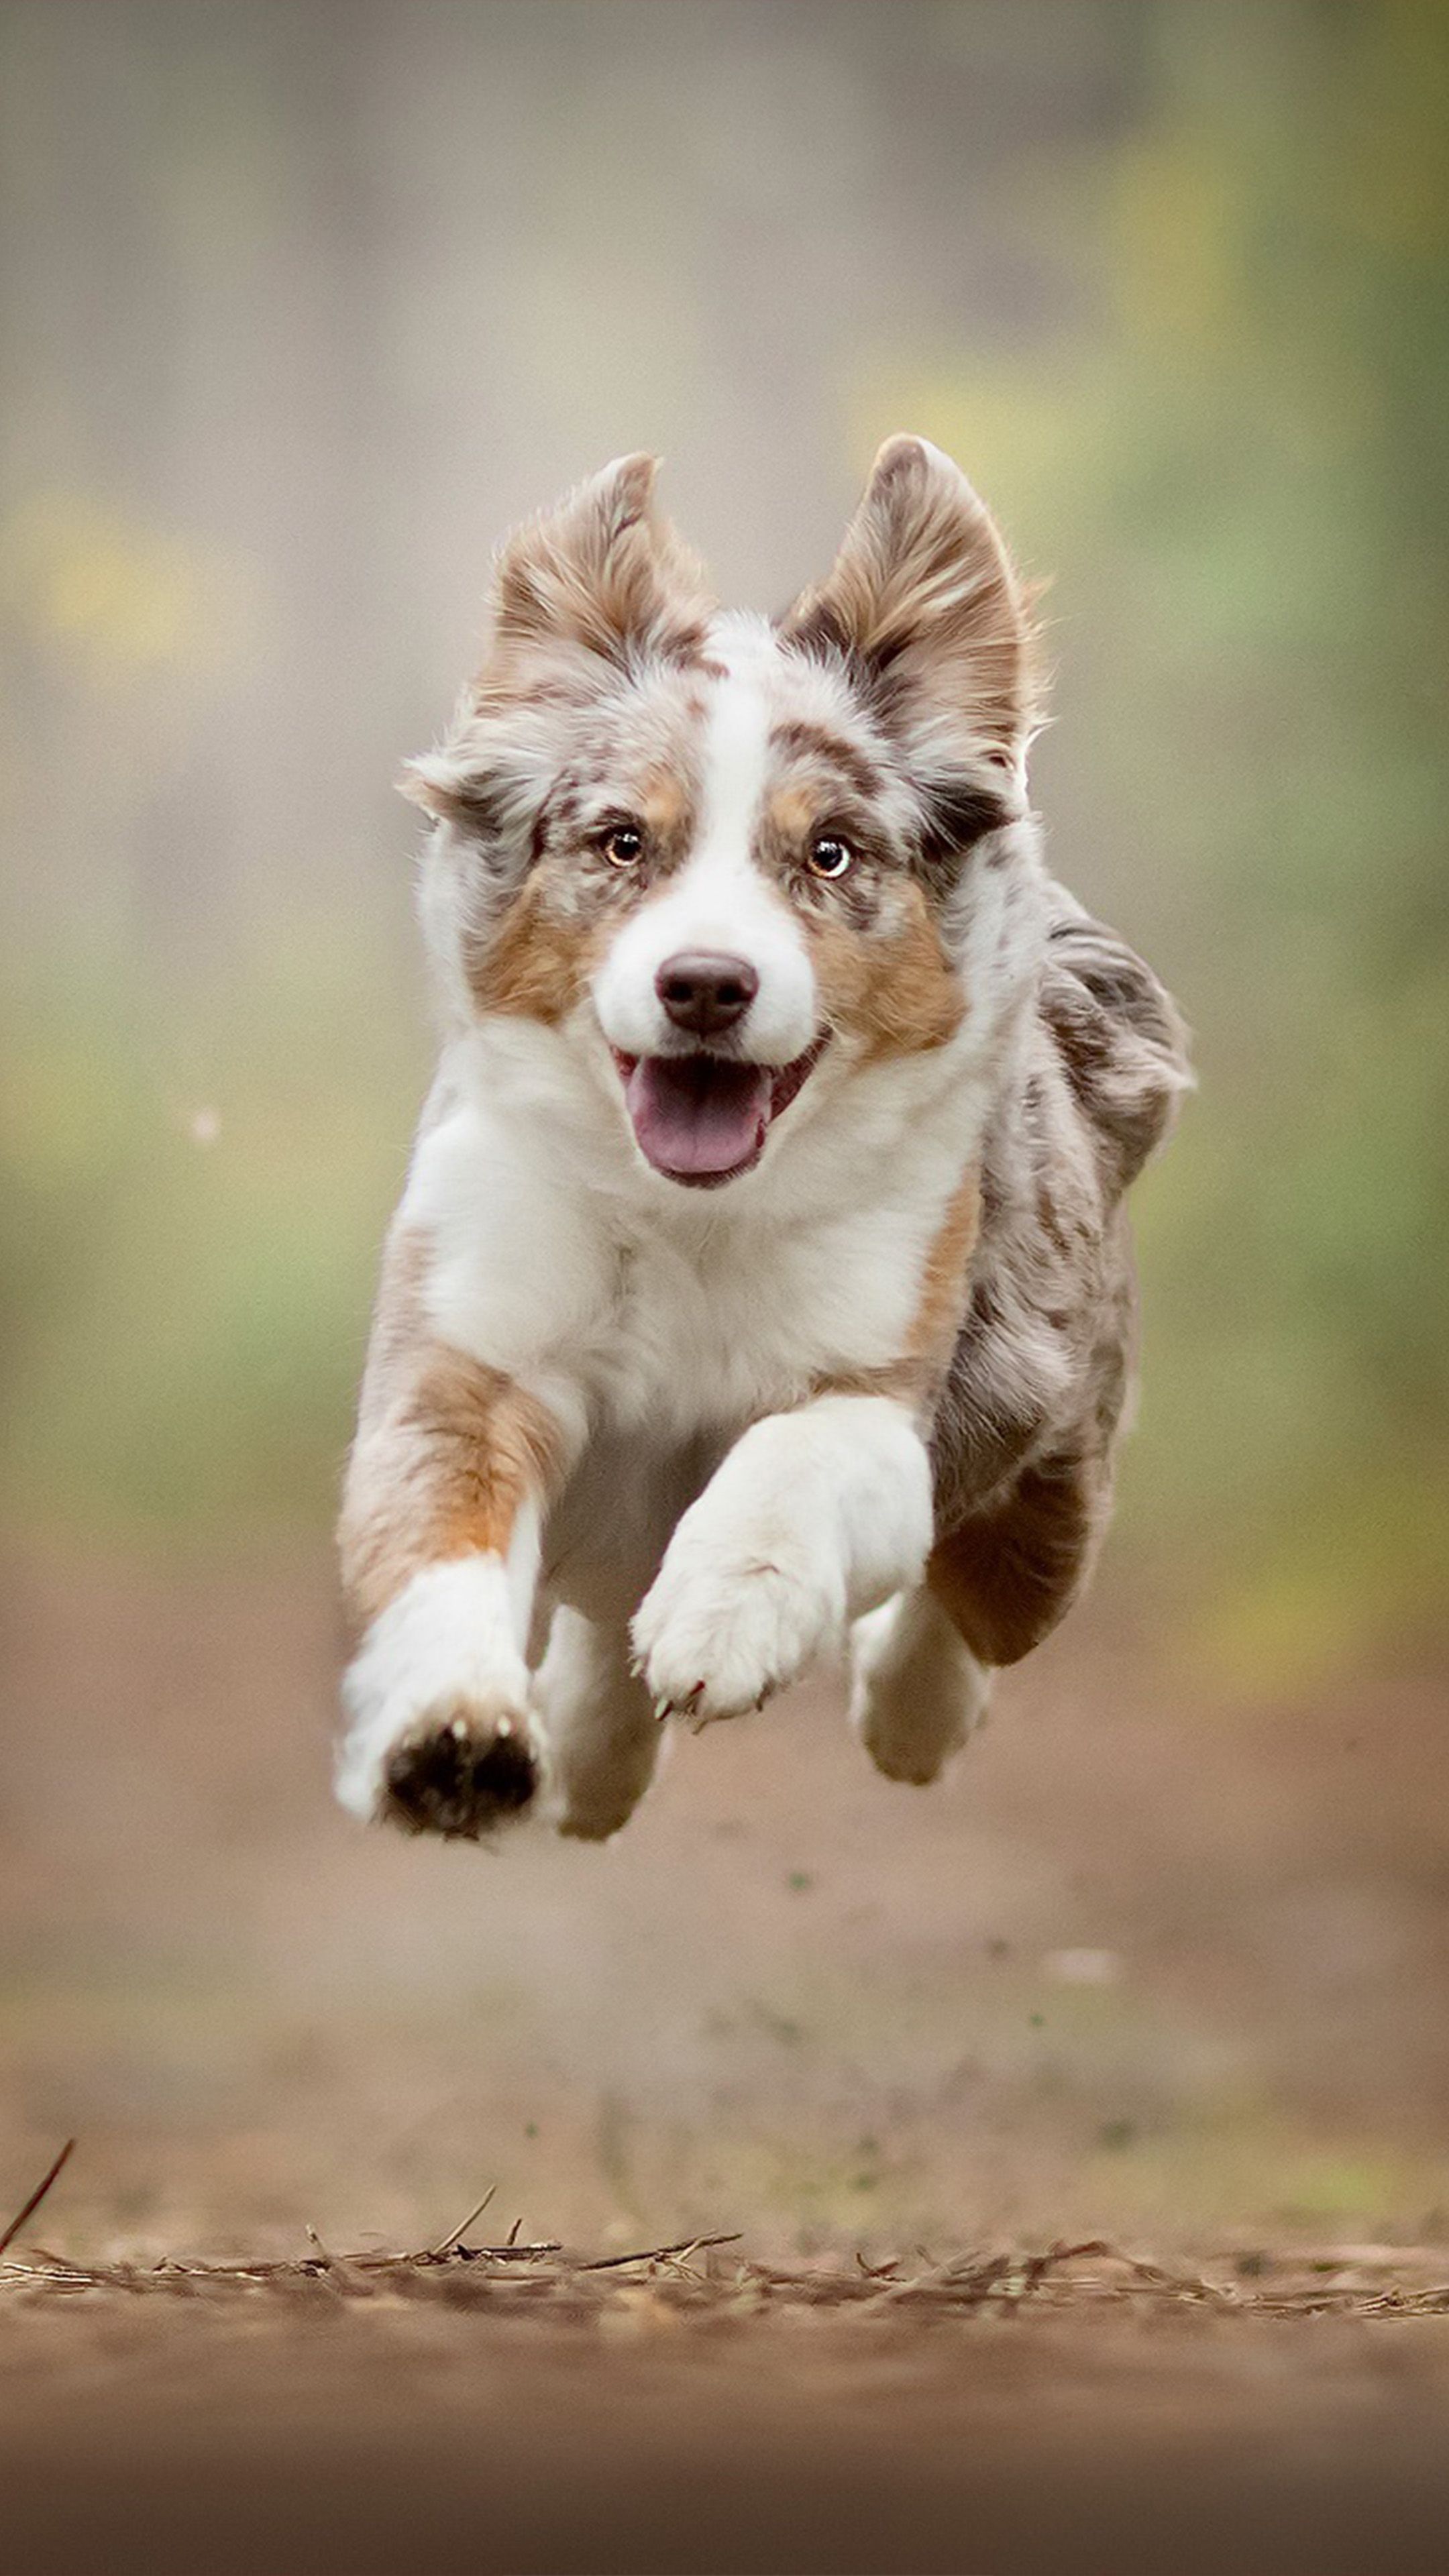 Australian Shepherd Running 4K Ultra HD Mobile Wallpaper. Shepherd dog breeds, Dog breeds, Cute dogs and puppies